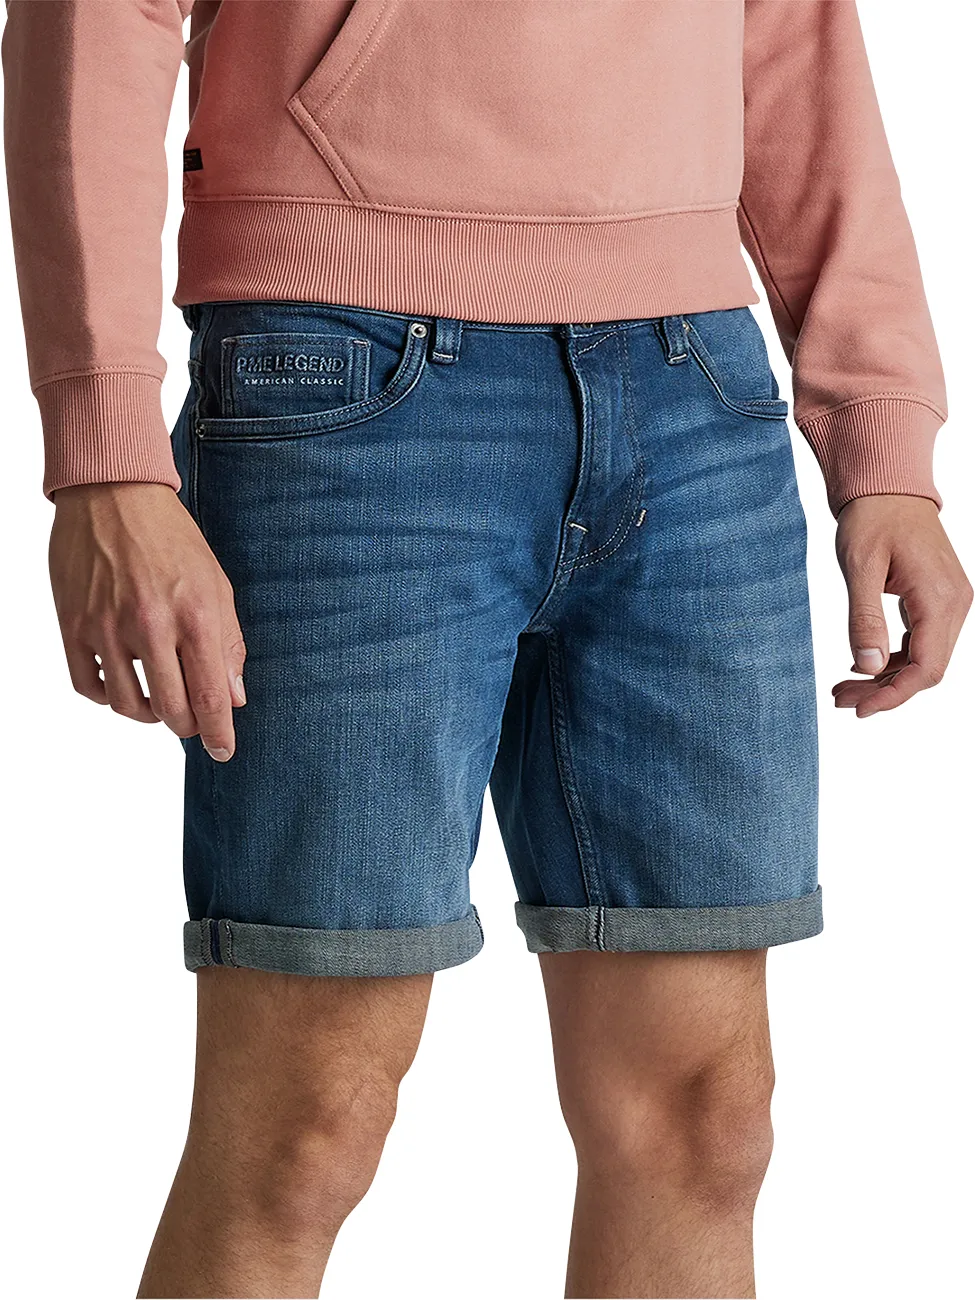 PME Legend Herren Jeans Short NIGHTFLIGHT Regular Fit Grau Comfort Duc Normaler Bund Reißverschluss W 29